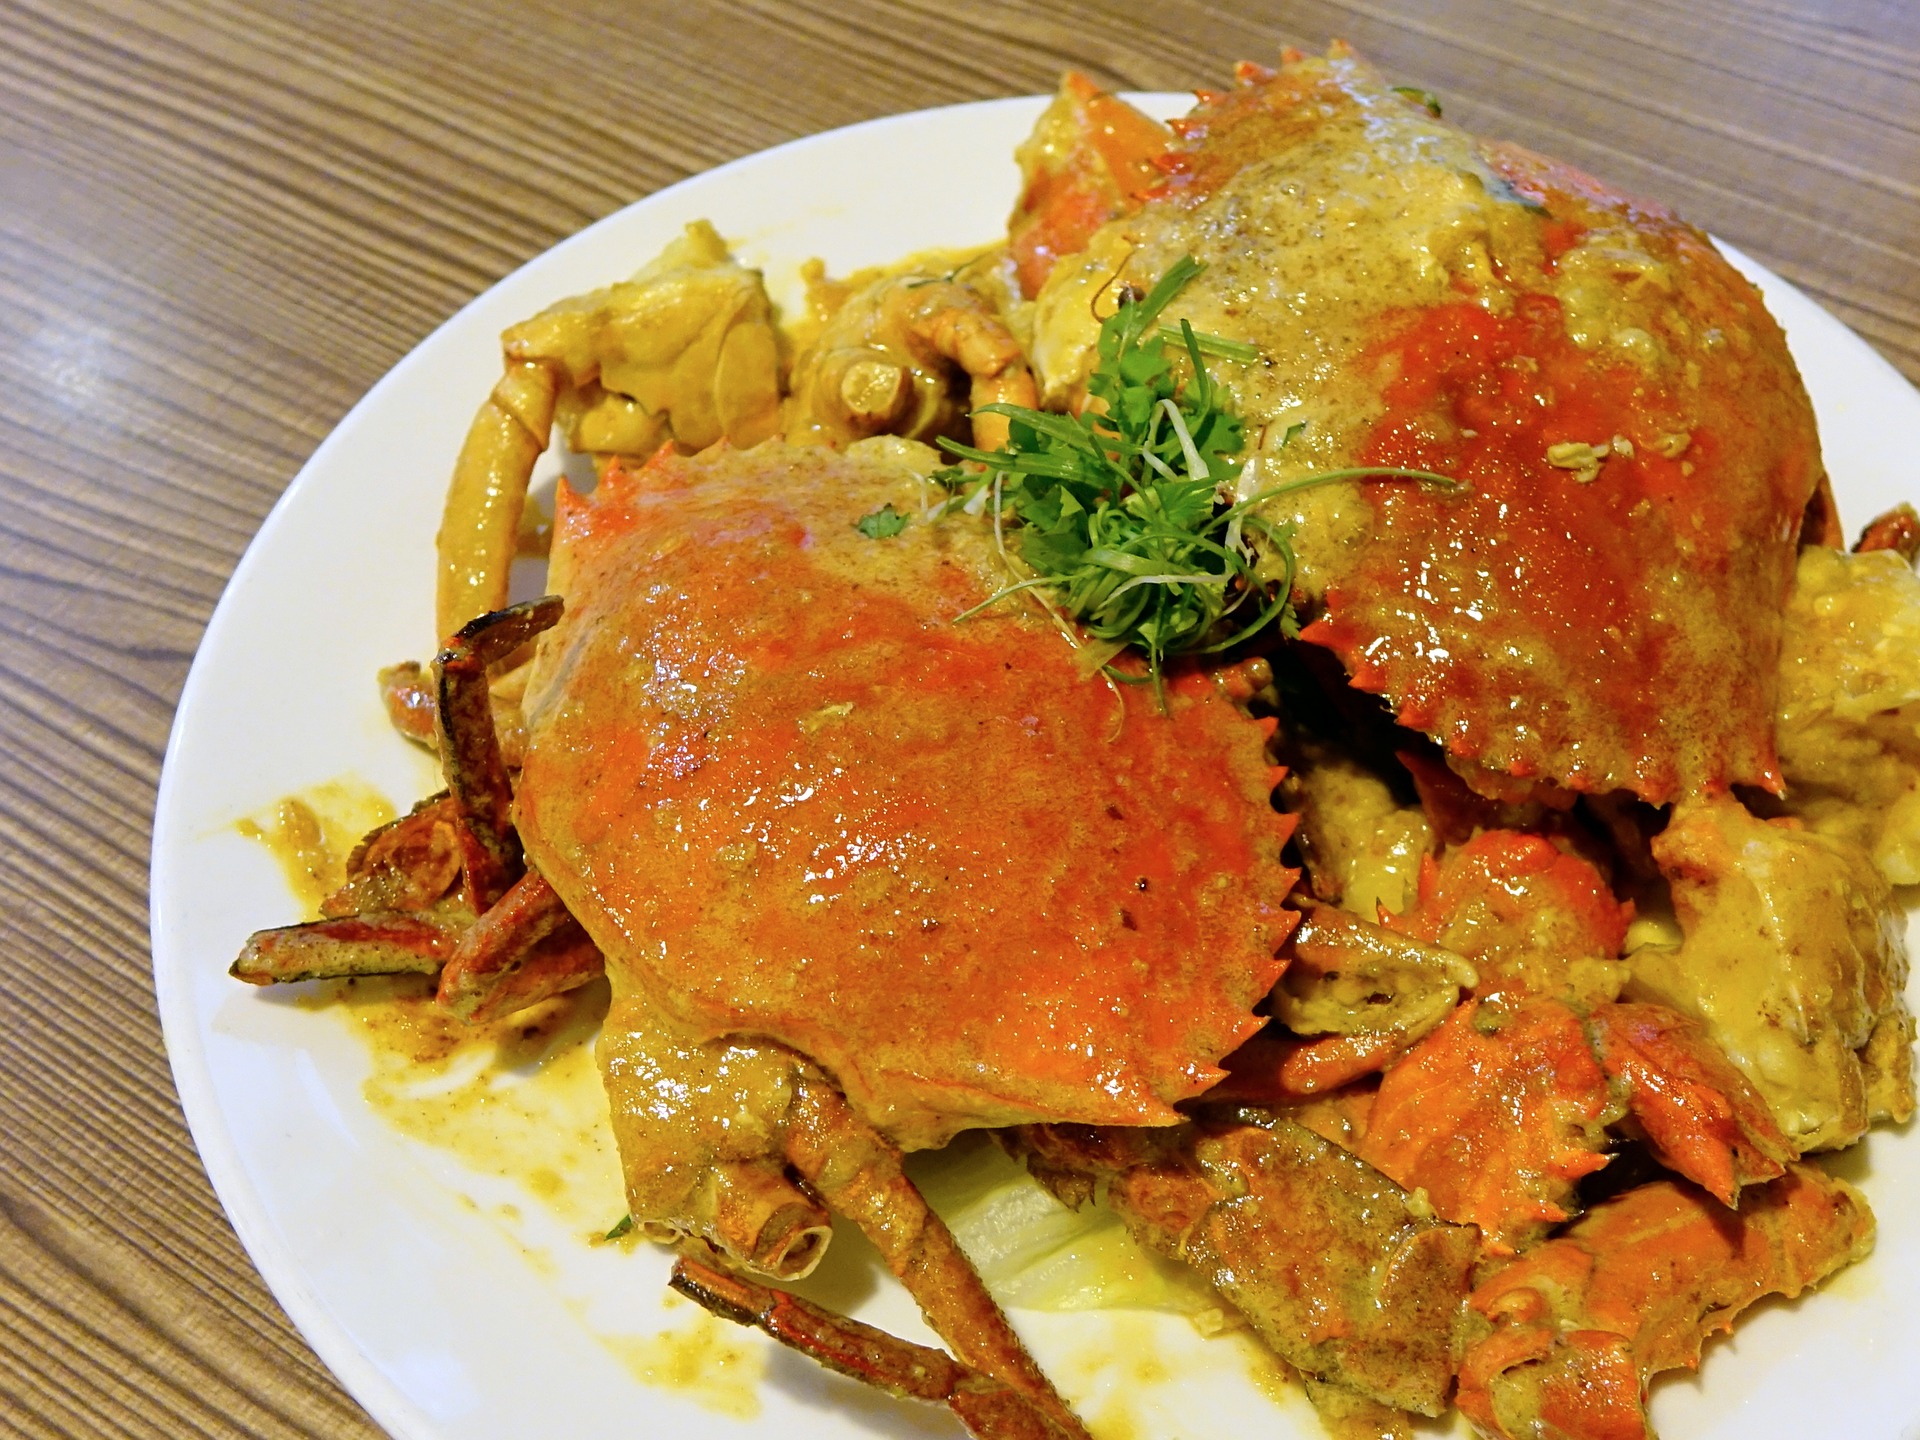 Spicy crab photo